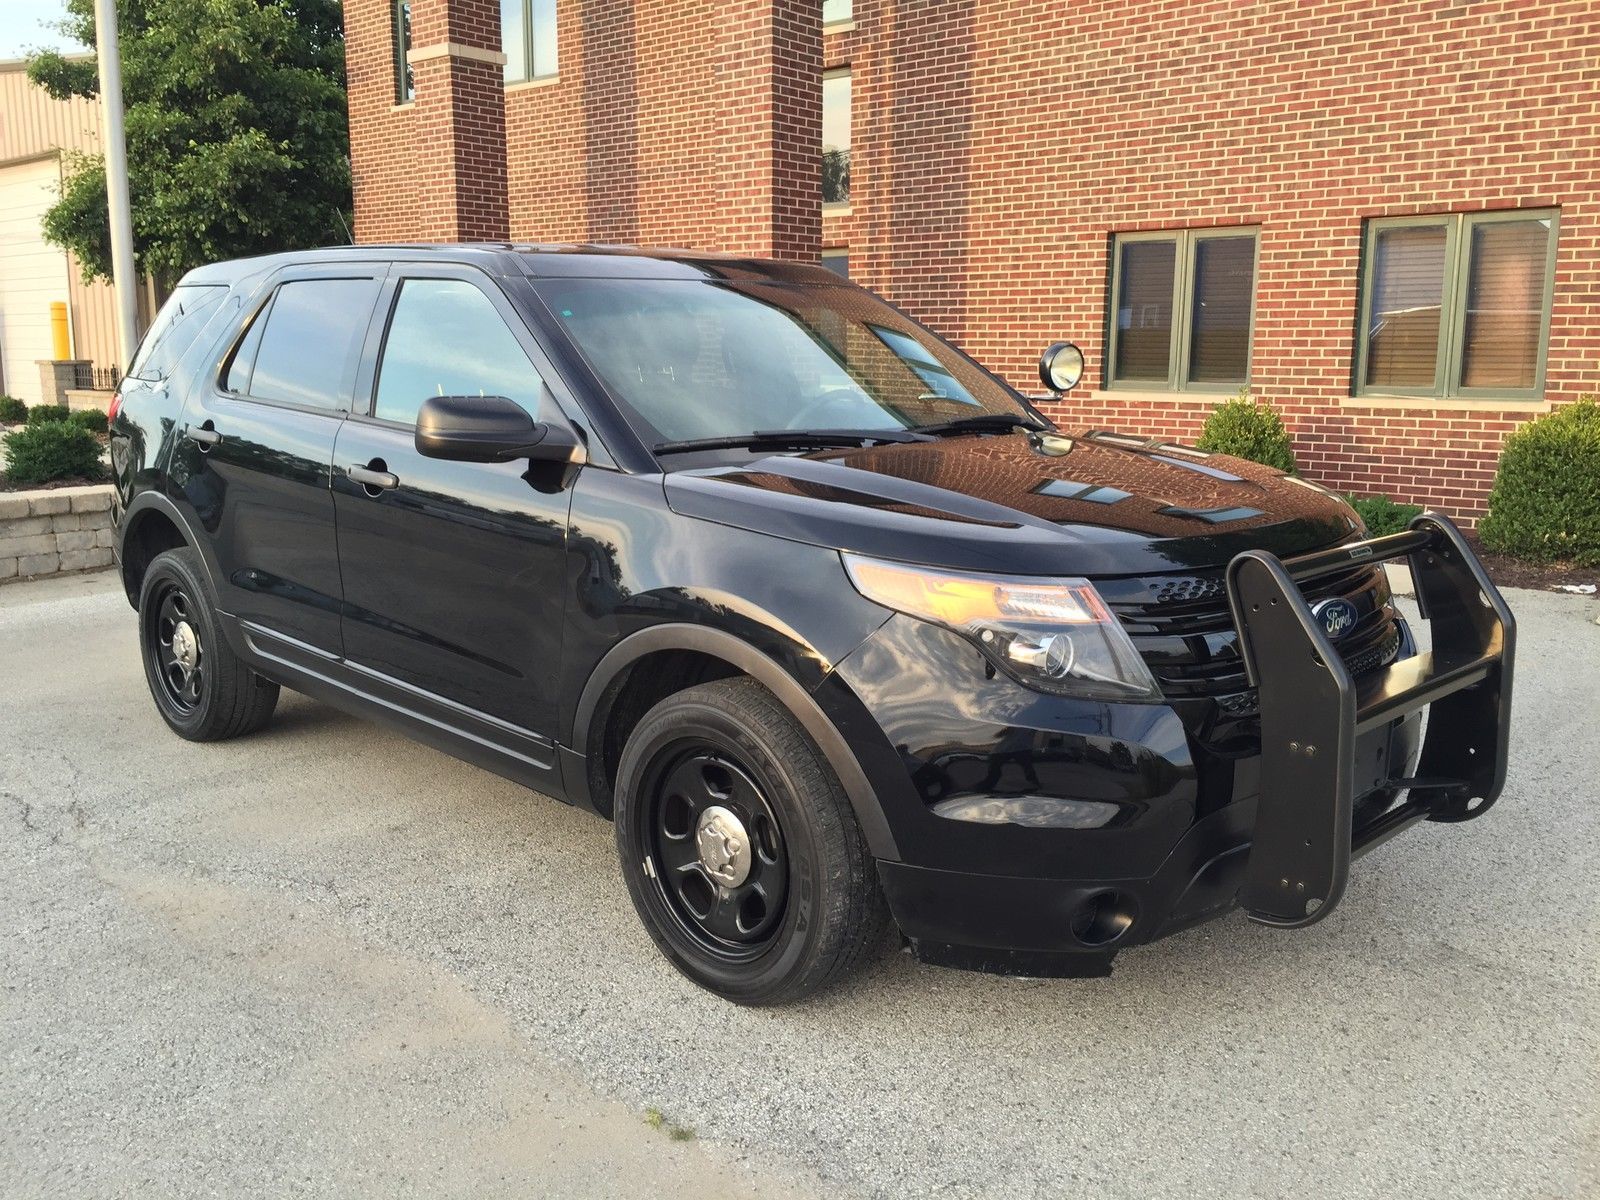 2014 Ford Explorer Police Interceptor 3.7L AWD | 2014 ford explorer, Ford  explorer, Ford police